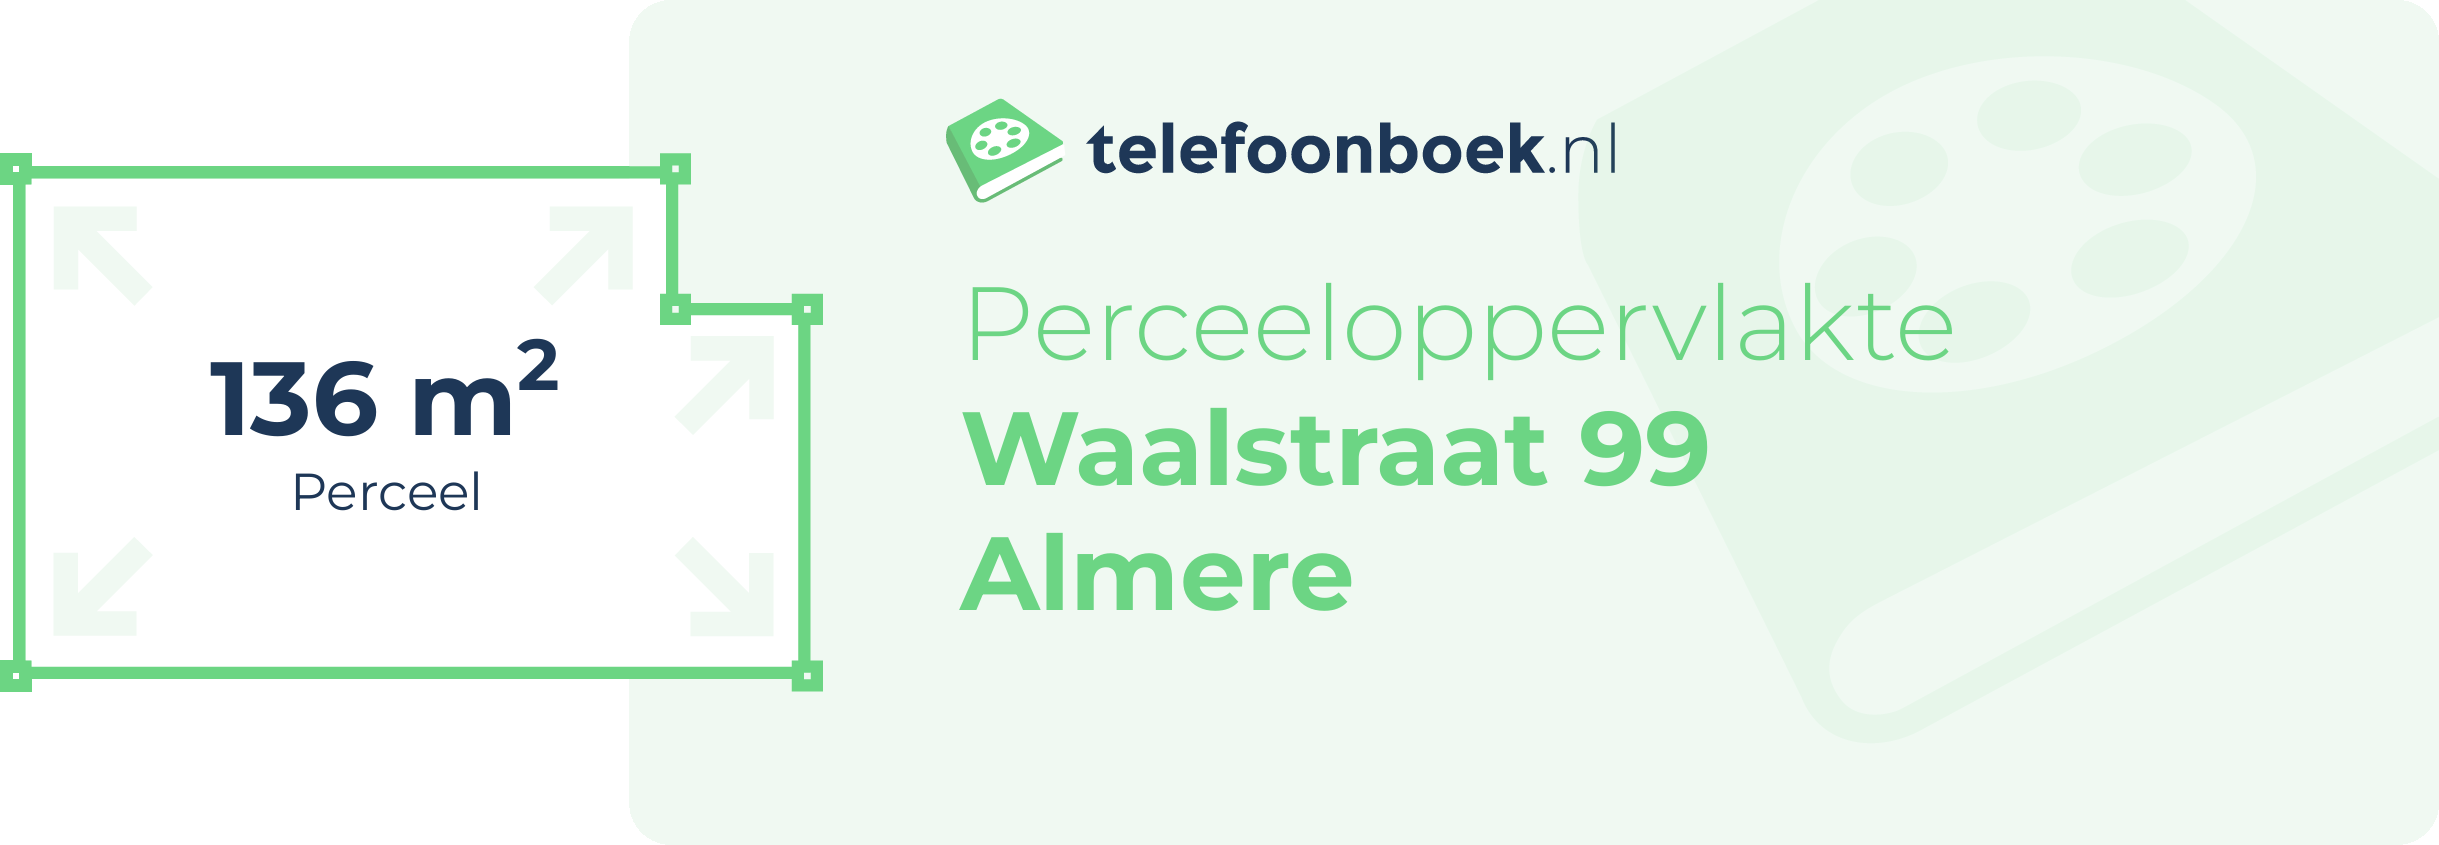 Perceeloppervlakte Waalstraat 99 Almere